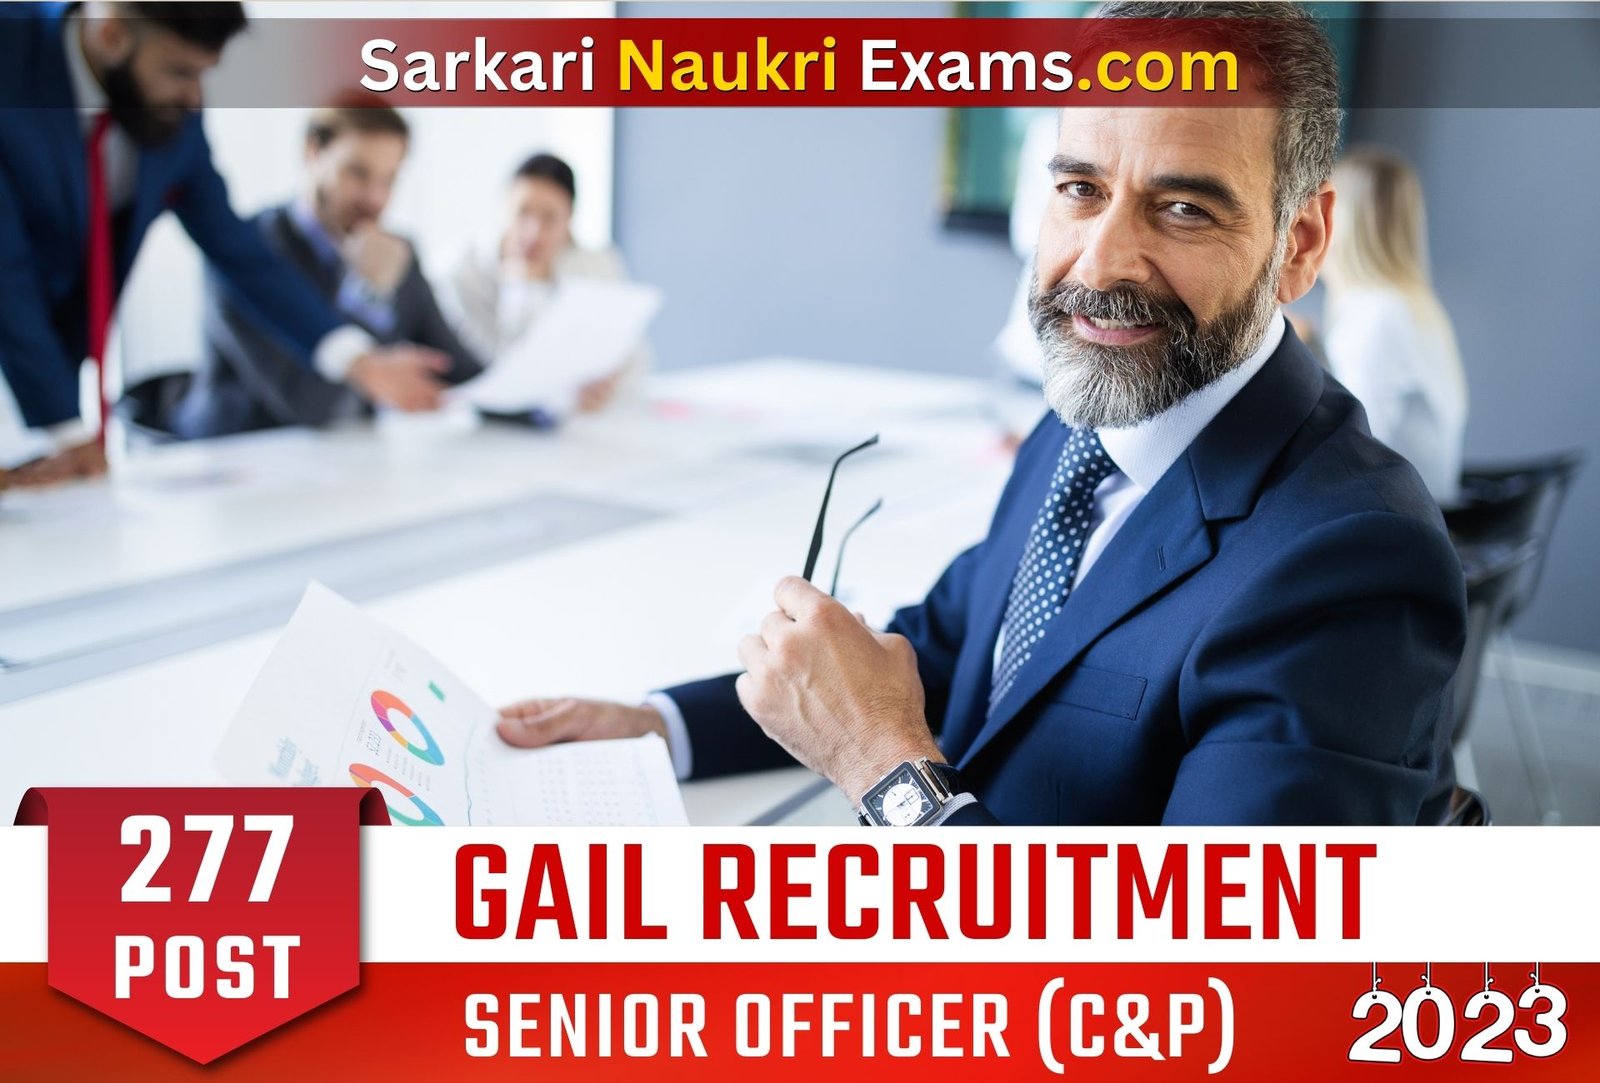 GAIL Senior Officer (C&P) Recruitment 2023 | 277 Post Vacancy Apply Online